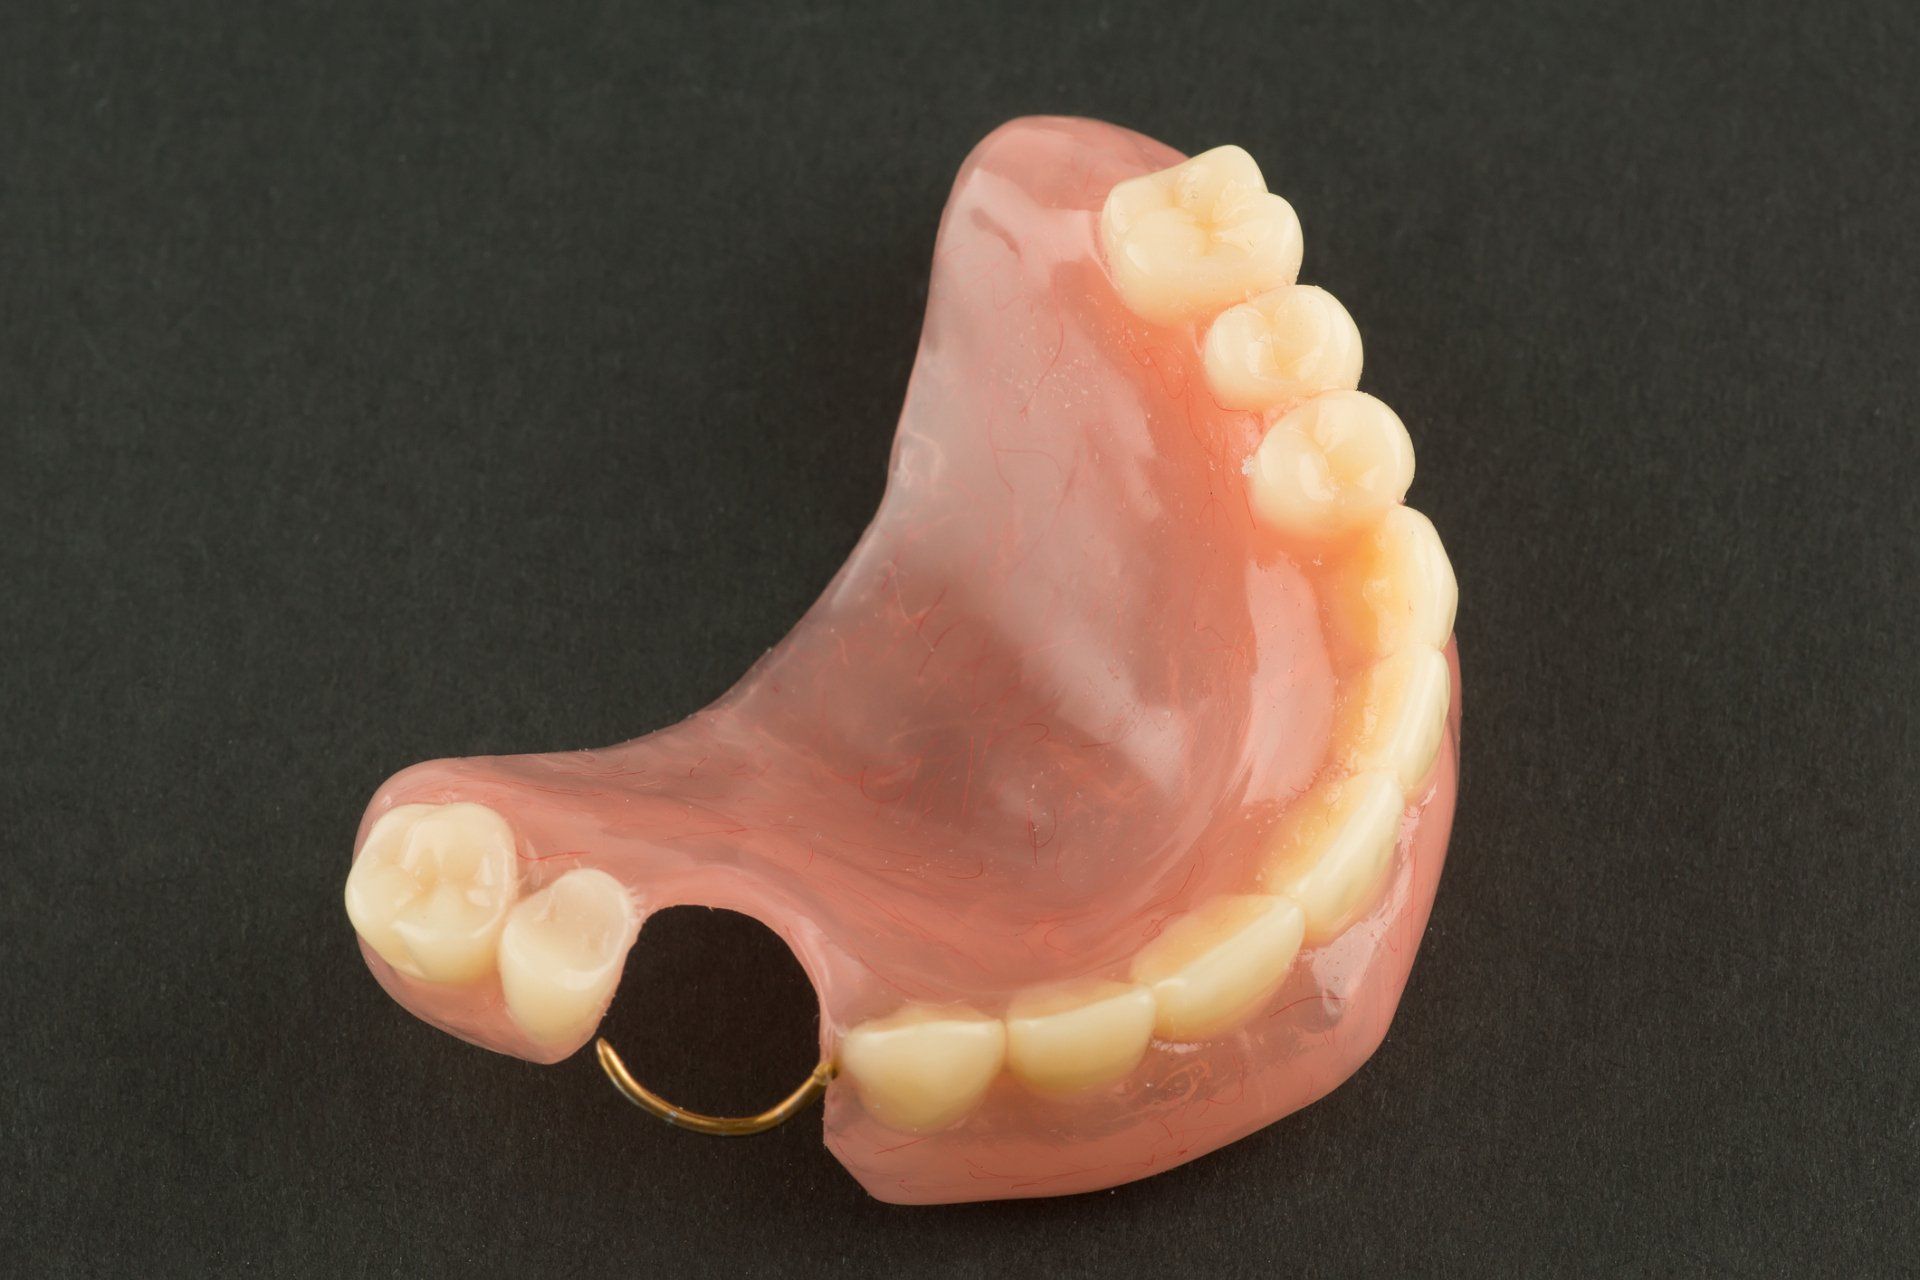 Acrylic Dental Prosthesis With Metal Retaining Elements - Mosman, NSW - Mosman Denture Clinic